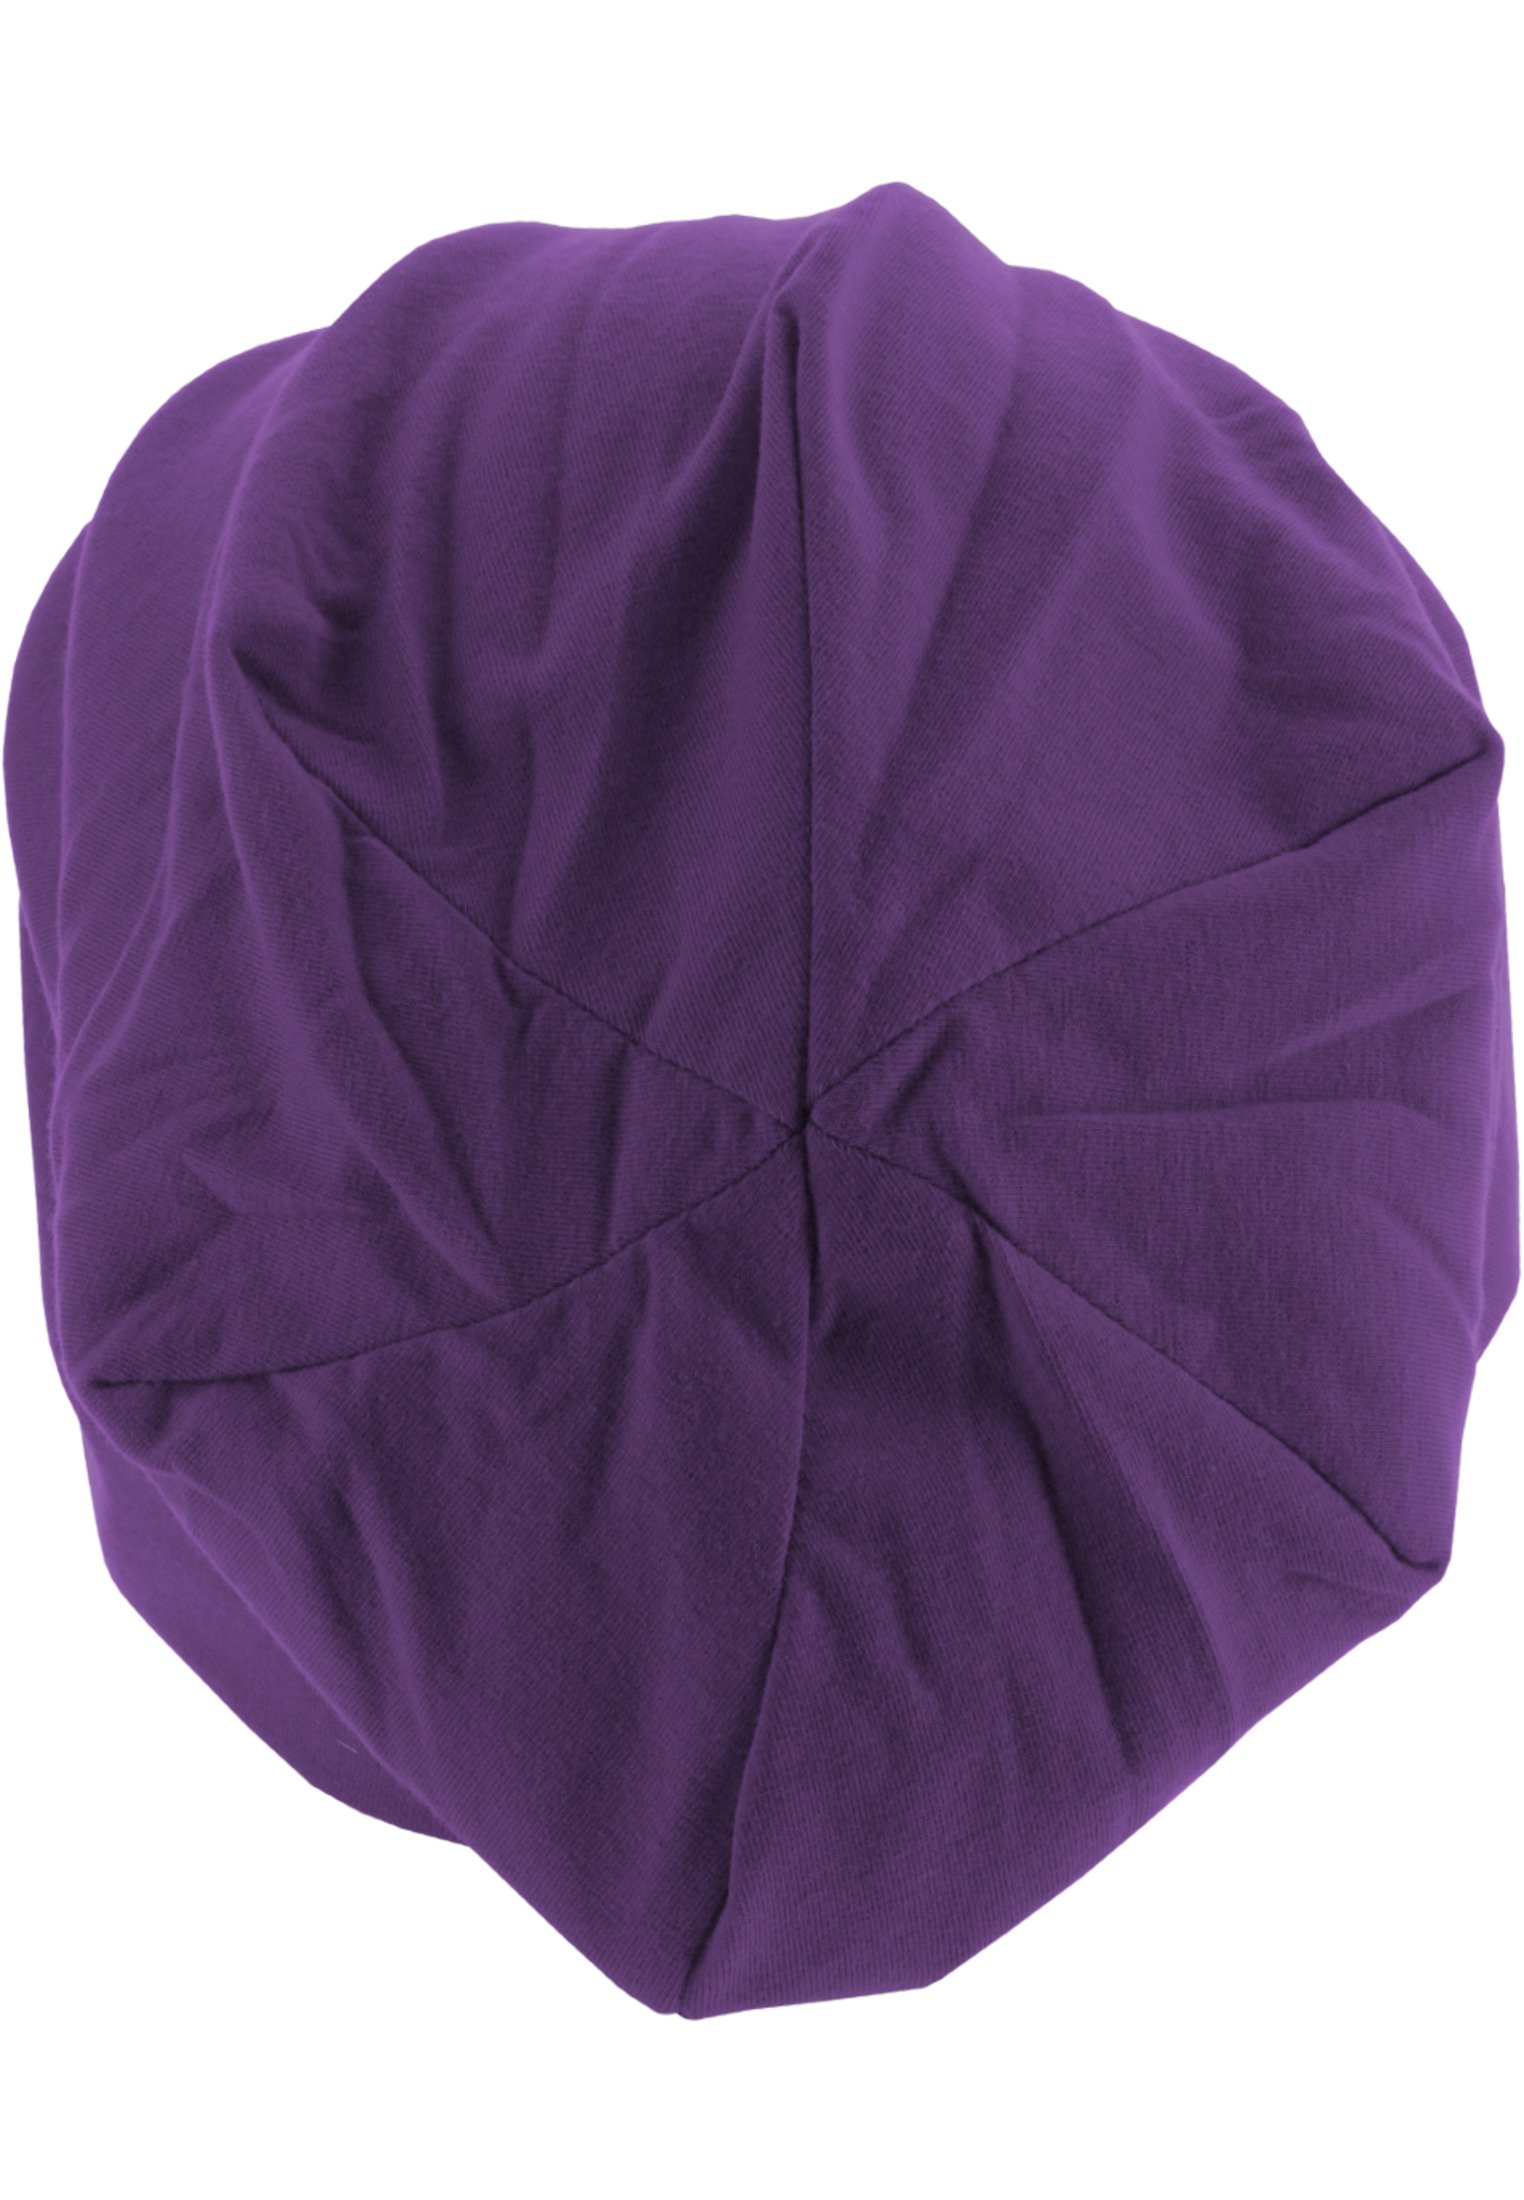 Jersey Beanie MSTRDS purple one size